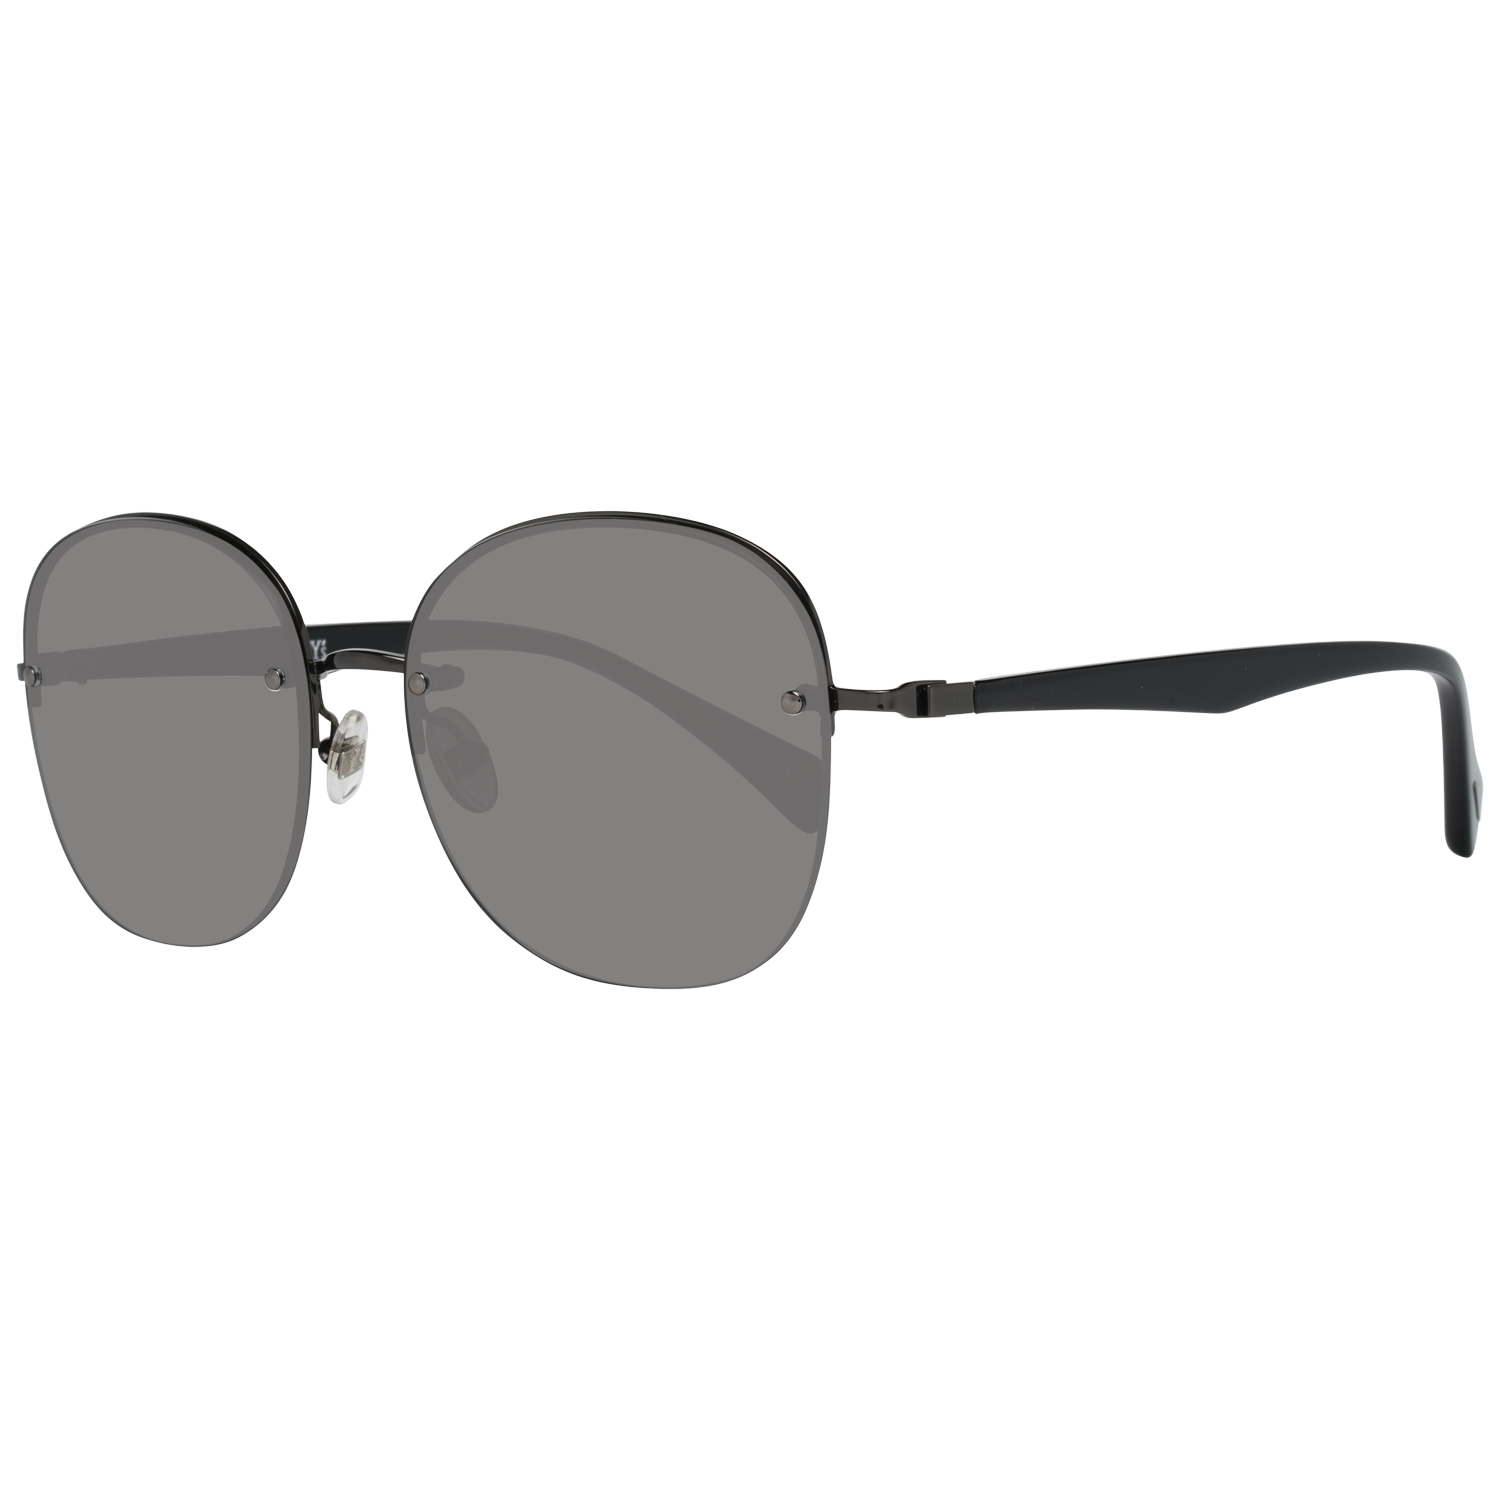 Yohji Yamamoto Sunglasses YS7003 900 56 Black